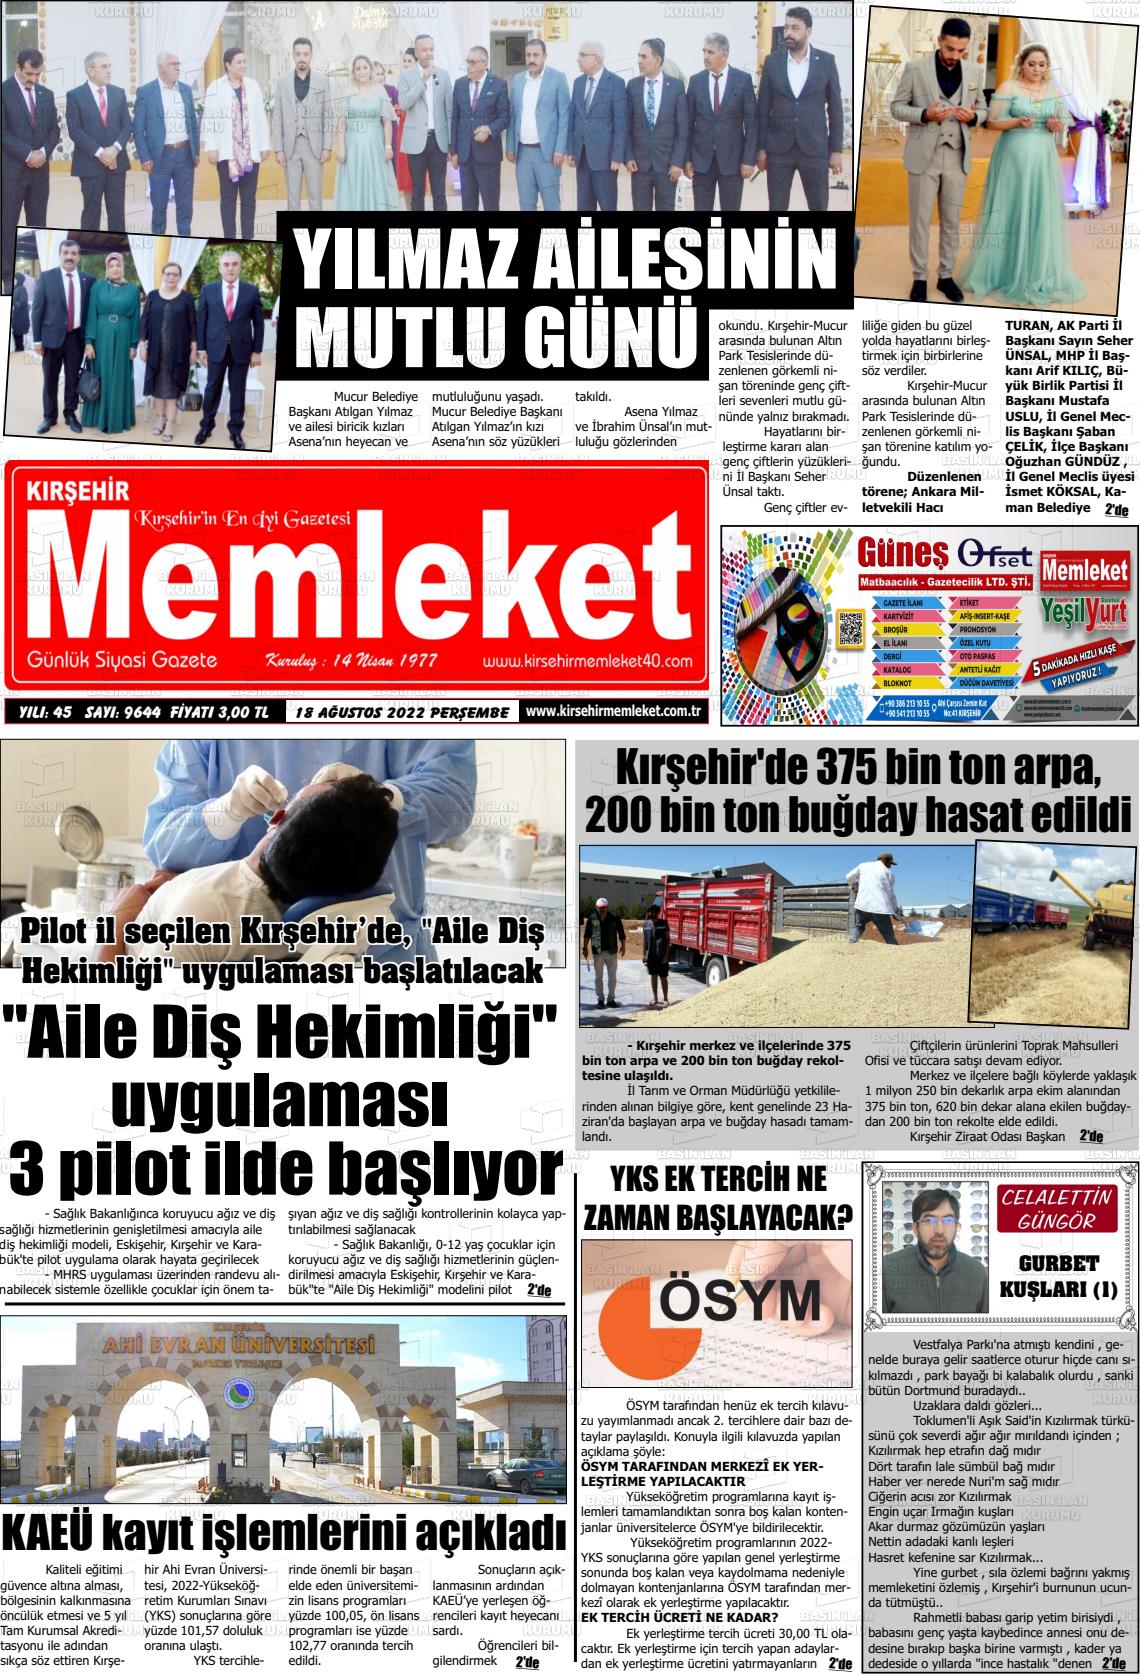 18 Ağustos 2022 Kırşehir Memleket Gazete Manşeti